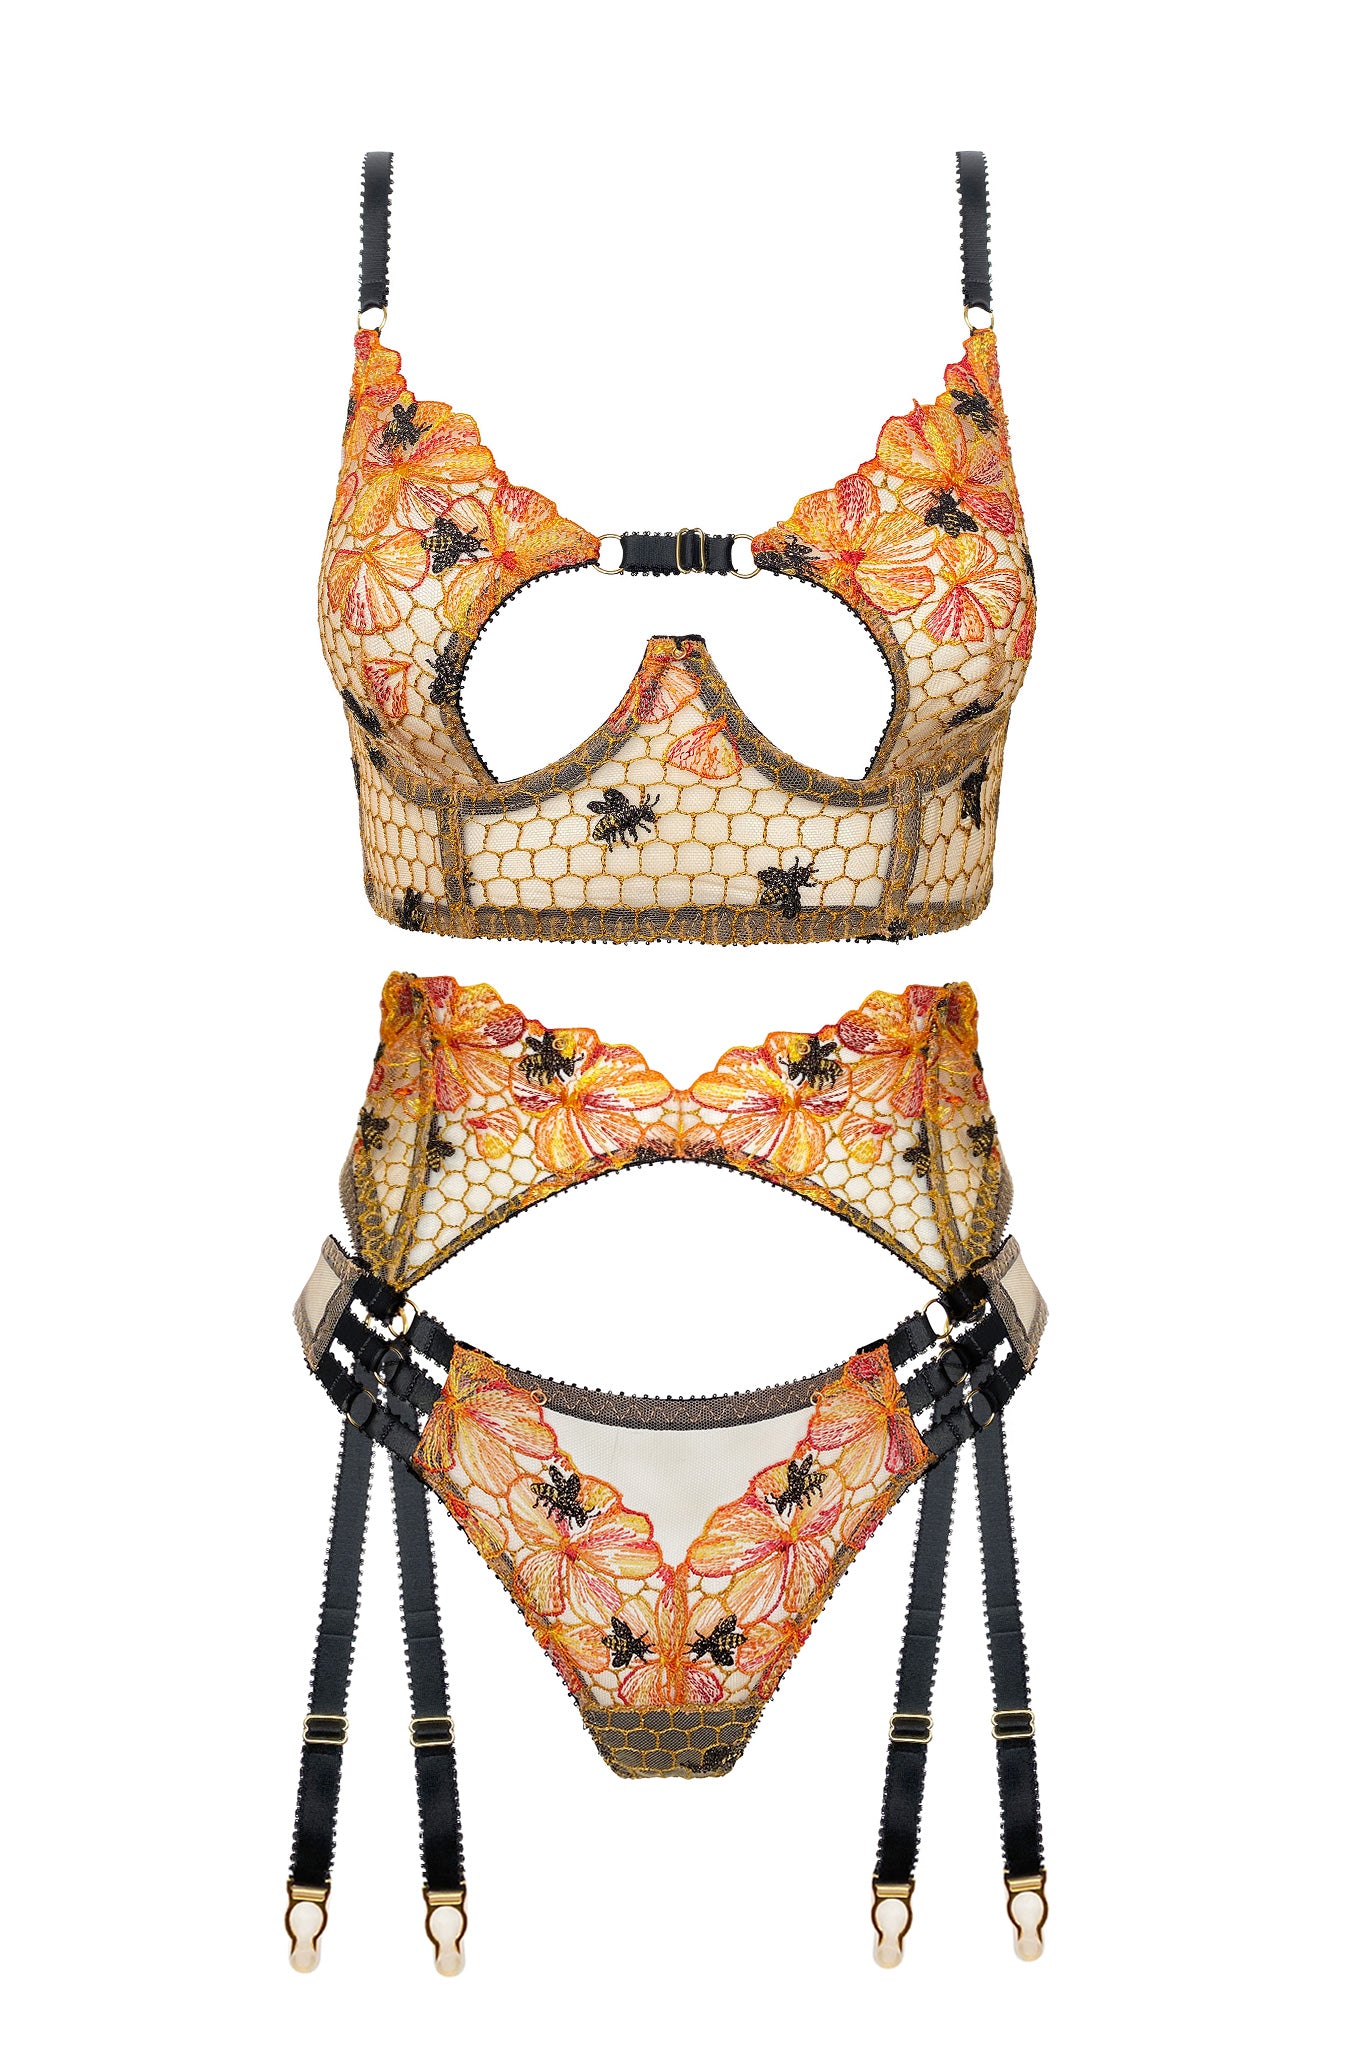 Queen B. lingerie: Your bra size worldwide